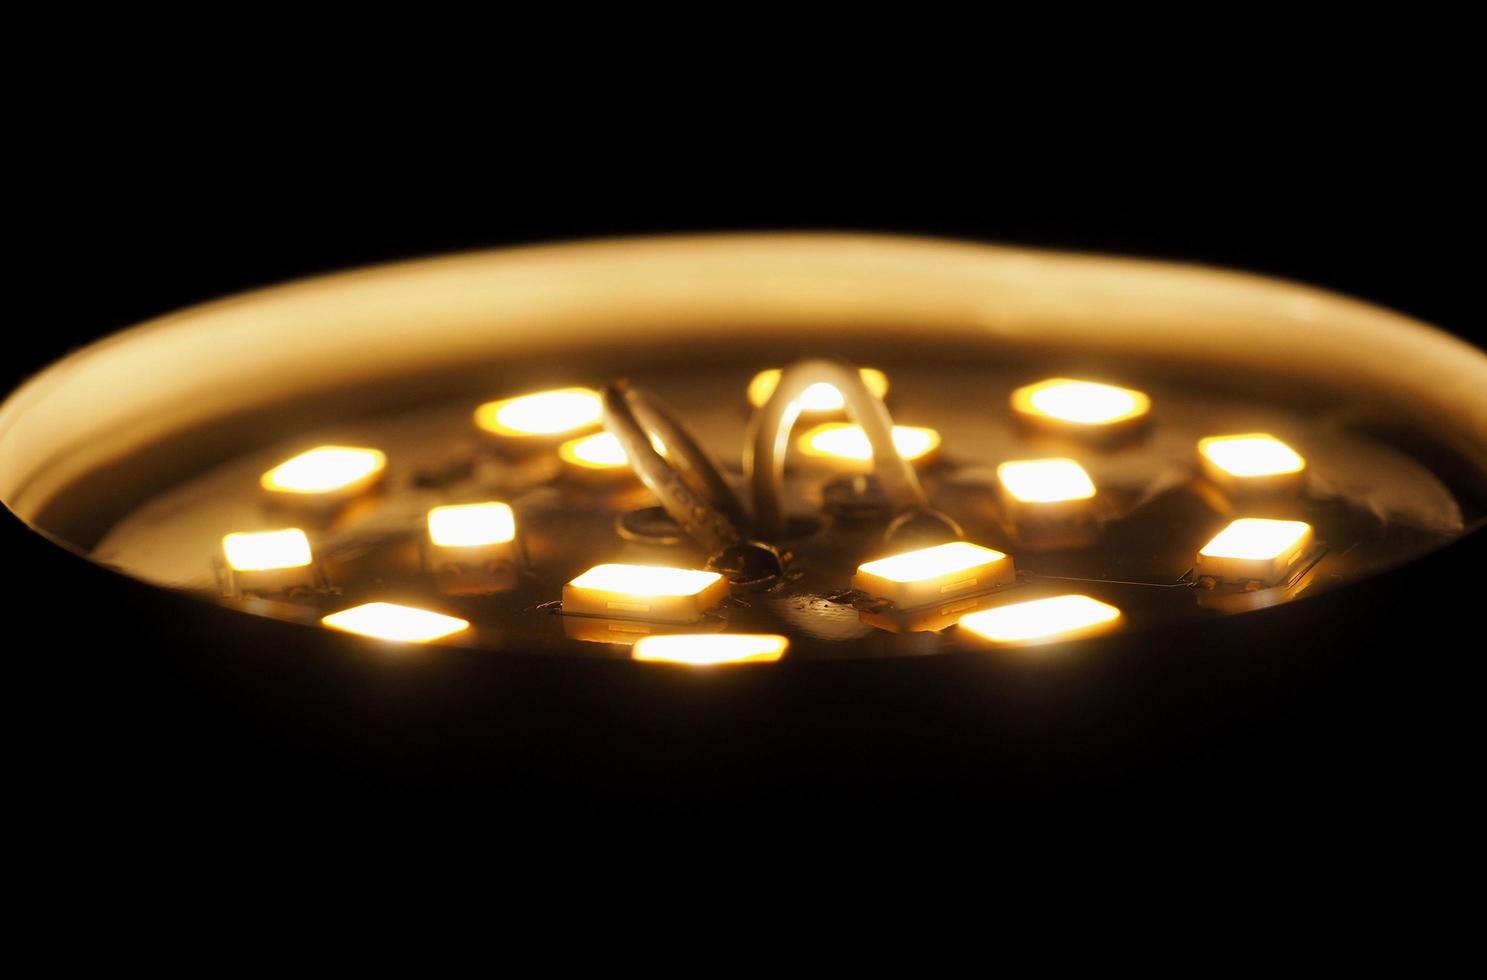 LED-Glühbirne foto